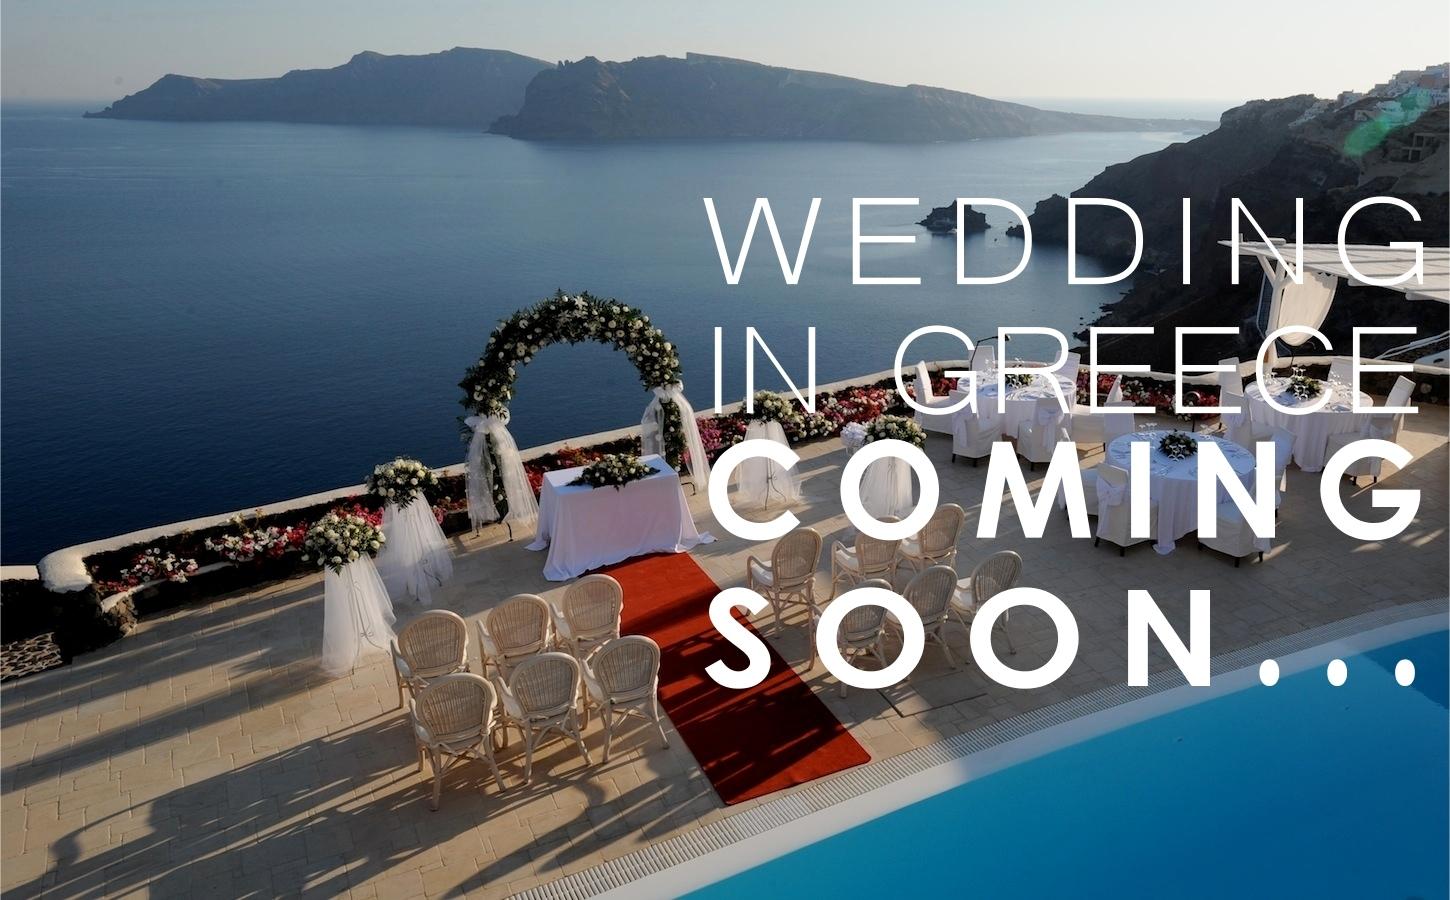 WEDDING IN GREECE, COMING SOON...